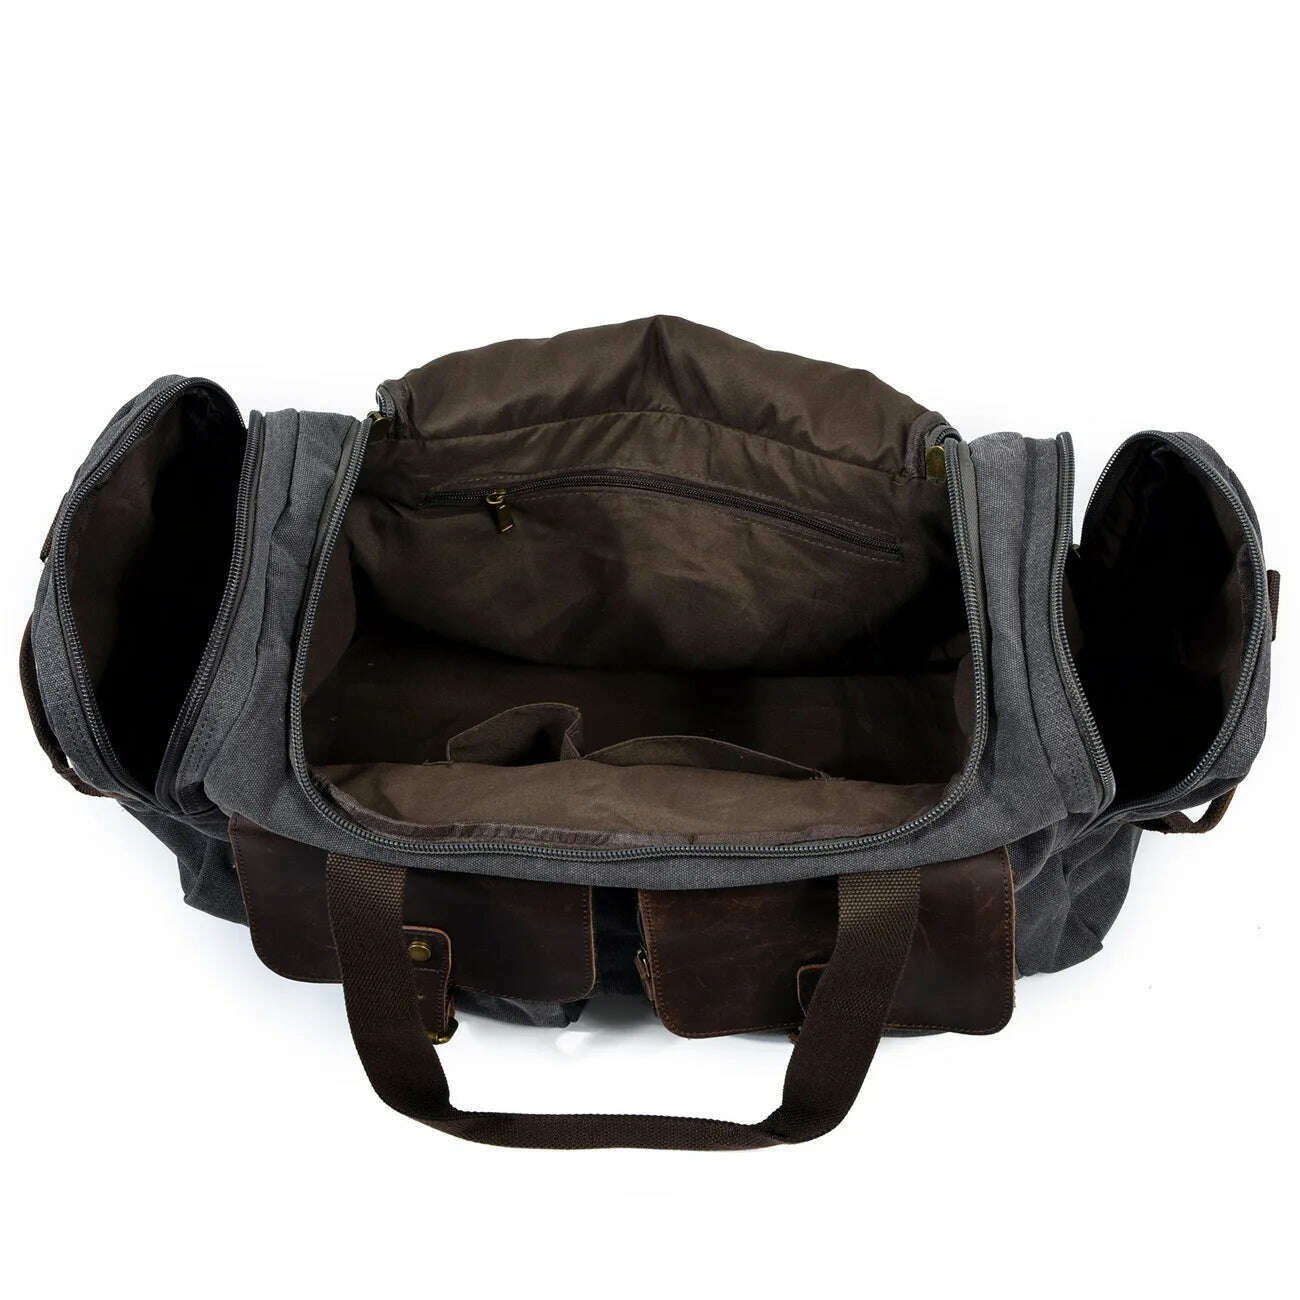 KIMLUD, Canvas bag large capacity for men's handbags leisure wear one shoulder aslant luggage, KIMLUD Womens Clothes